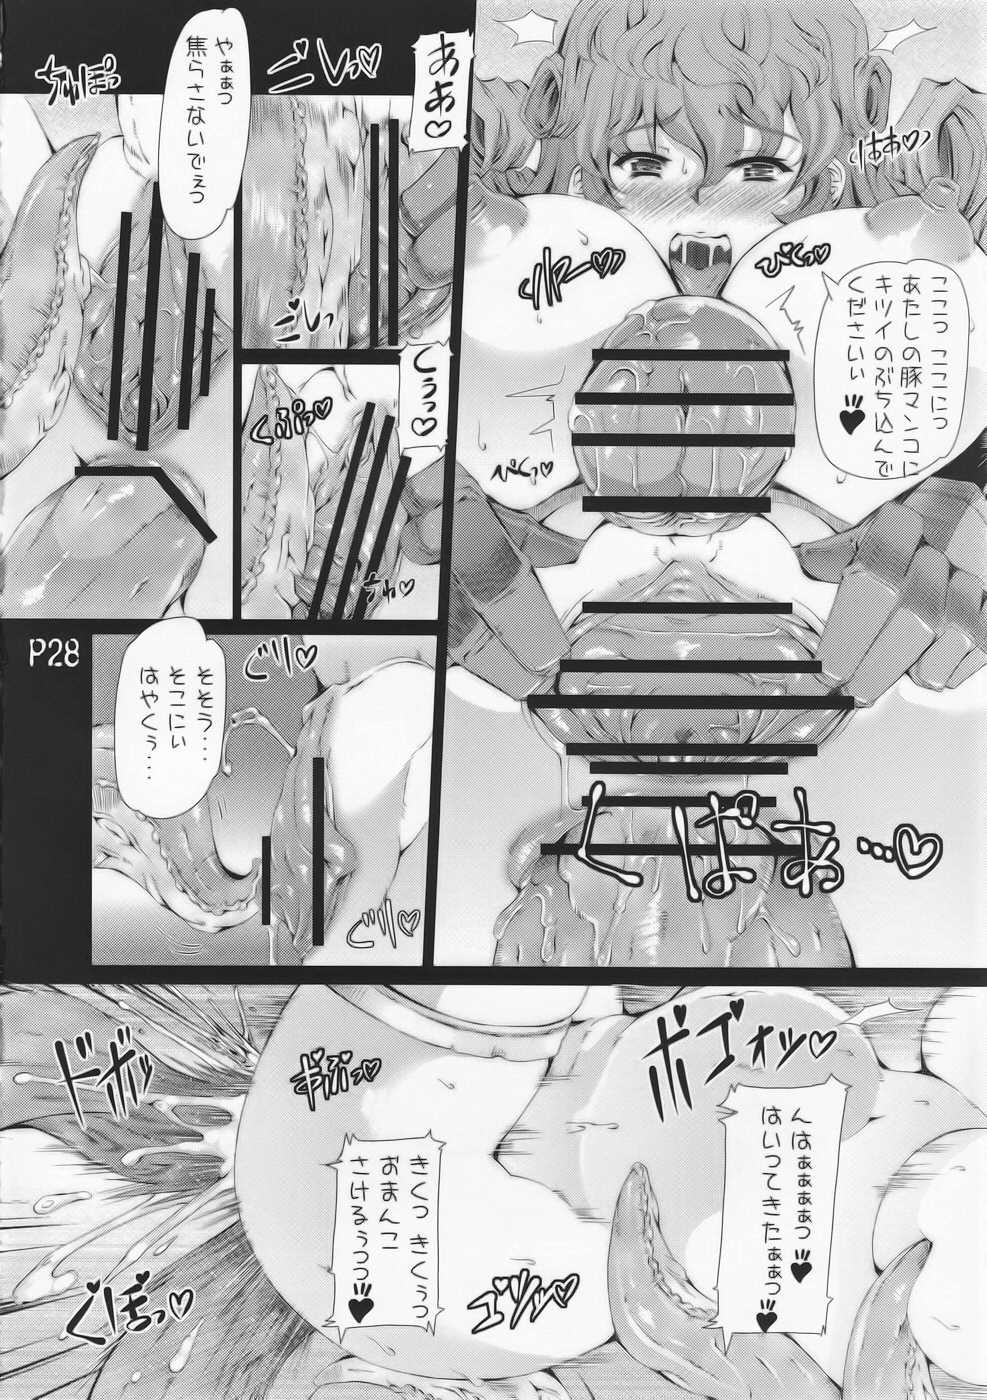 (C75)[Doronuma Kyoudai (Mr.lostman, RED-RUM)] Nitro Attack (Dragon Quest III) (C75)[泥沼兄弟 (Mr.lostman, RED-RUM)] にとろあたっく (ドラゴンクエスト III)